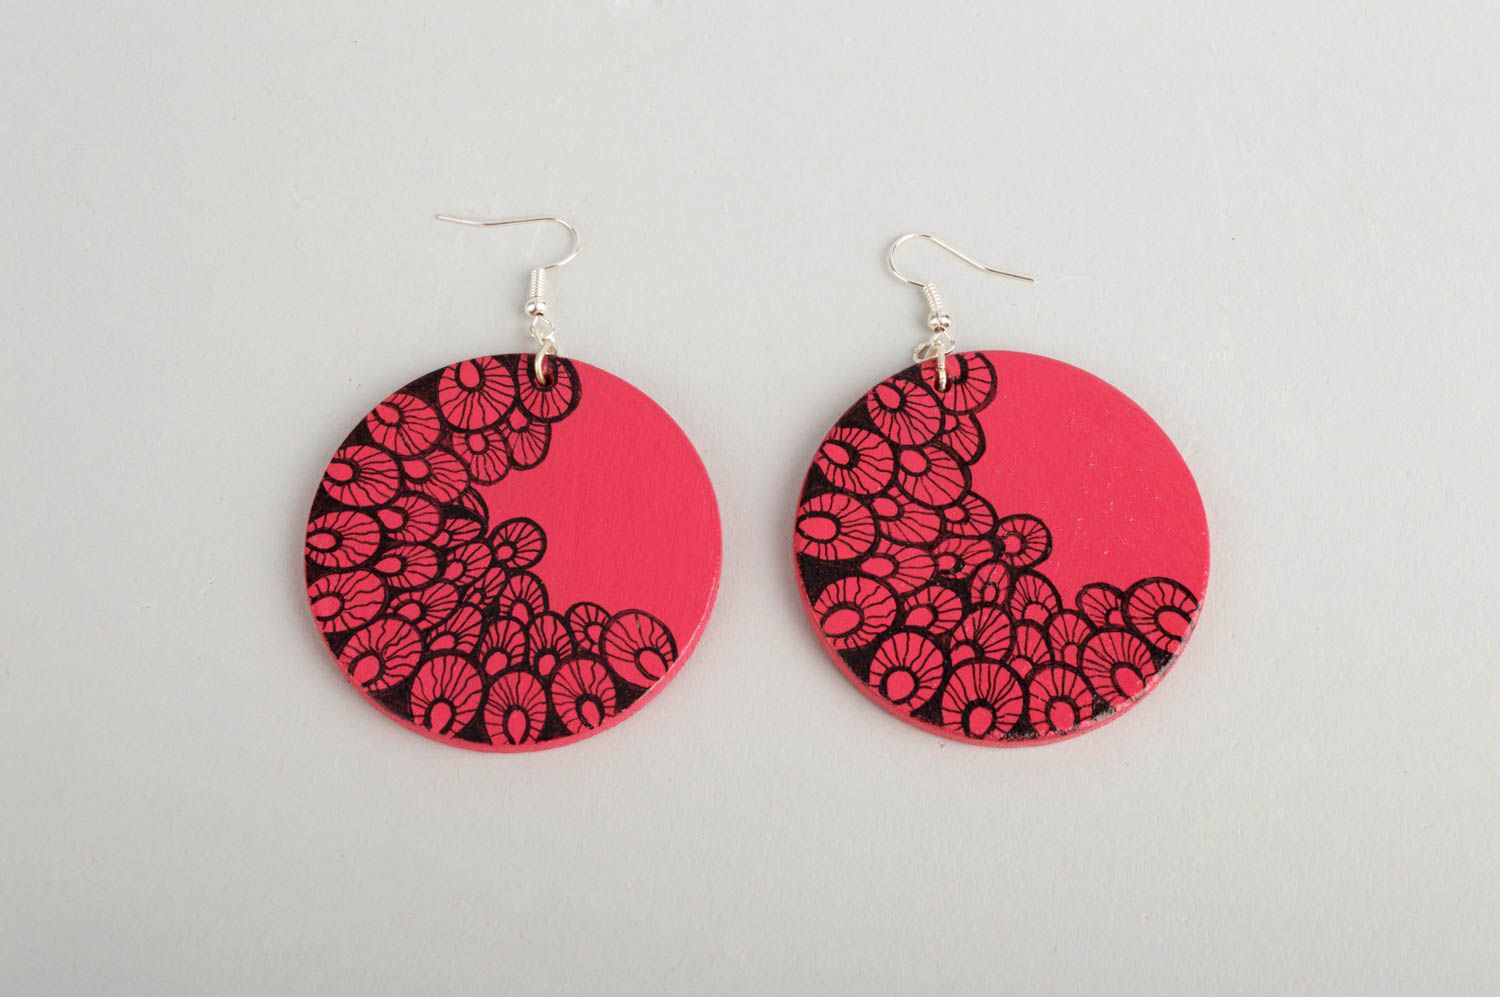 Ladies earrings handmade earrings wooden jewelry fashion accessories gift ideas photo 2